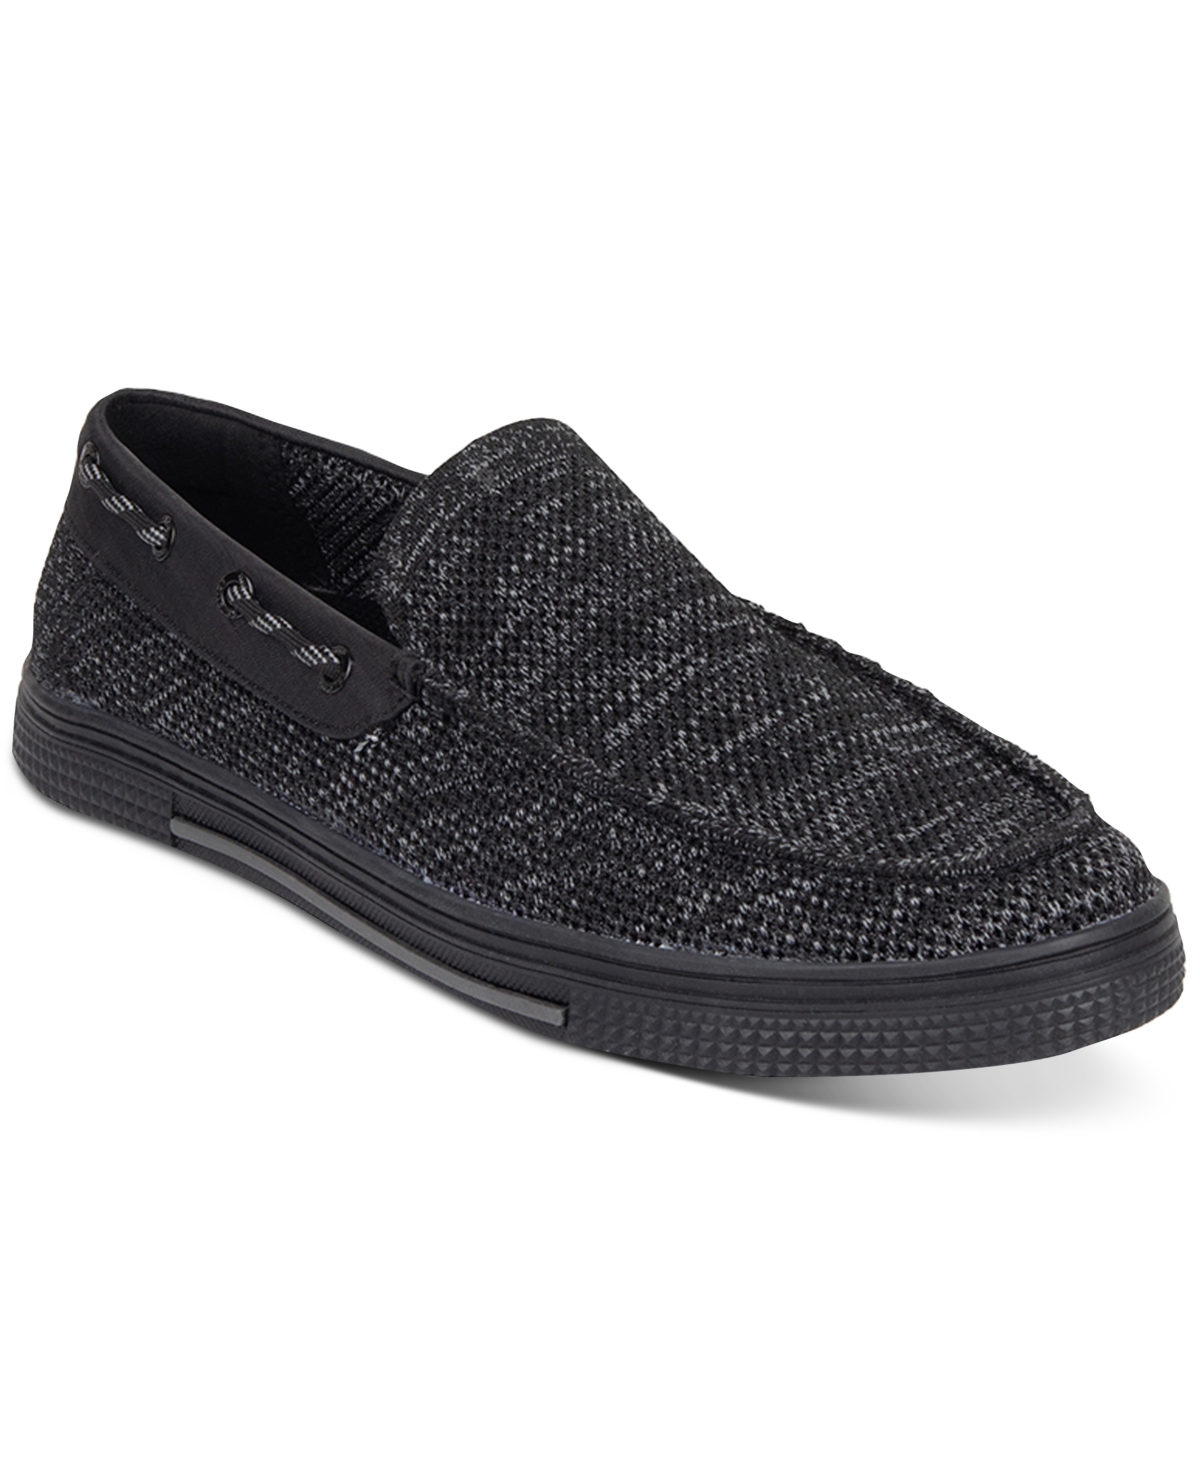 Men's Trace Knit Slip-On Shoes - Black